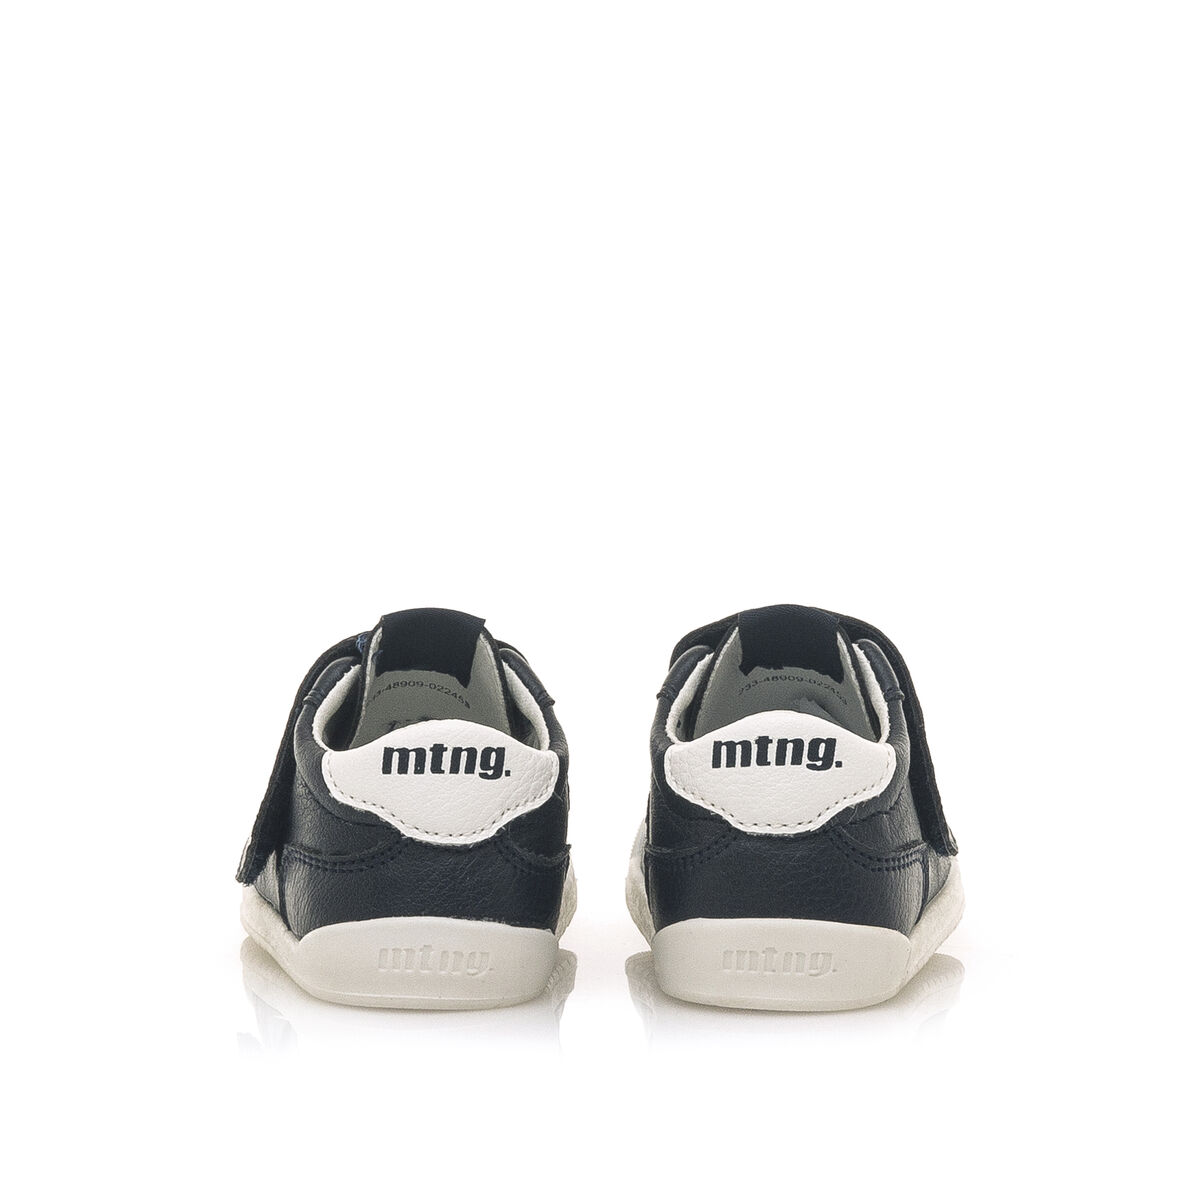 Zapatillas de Nino modelo FREE de MTNG image number 3